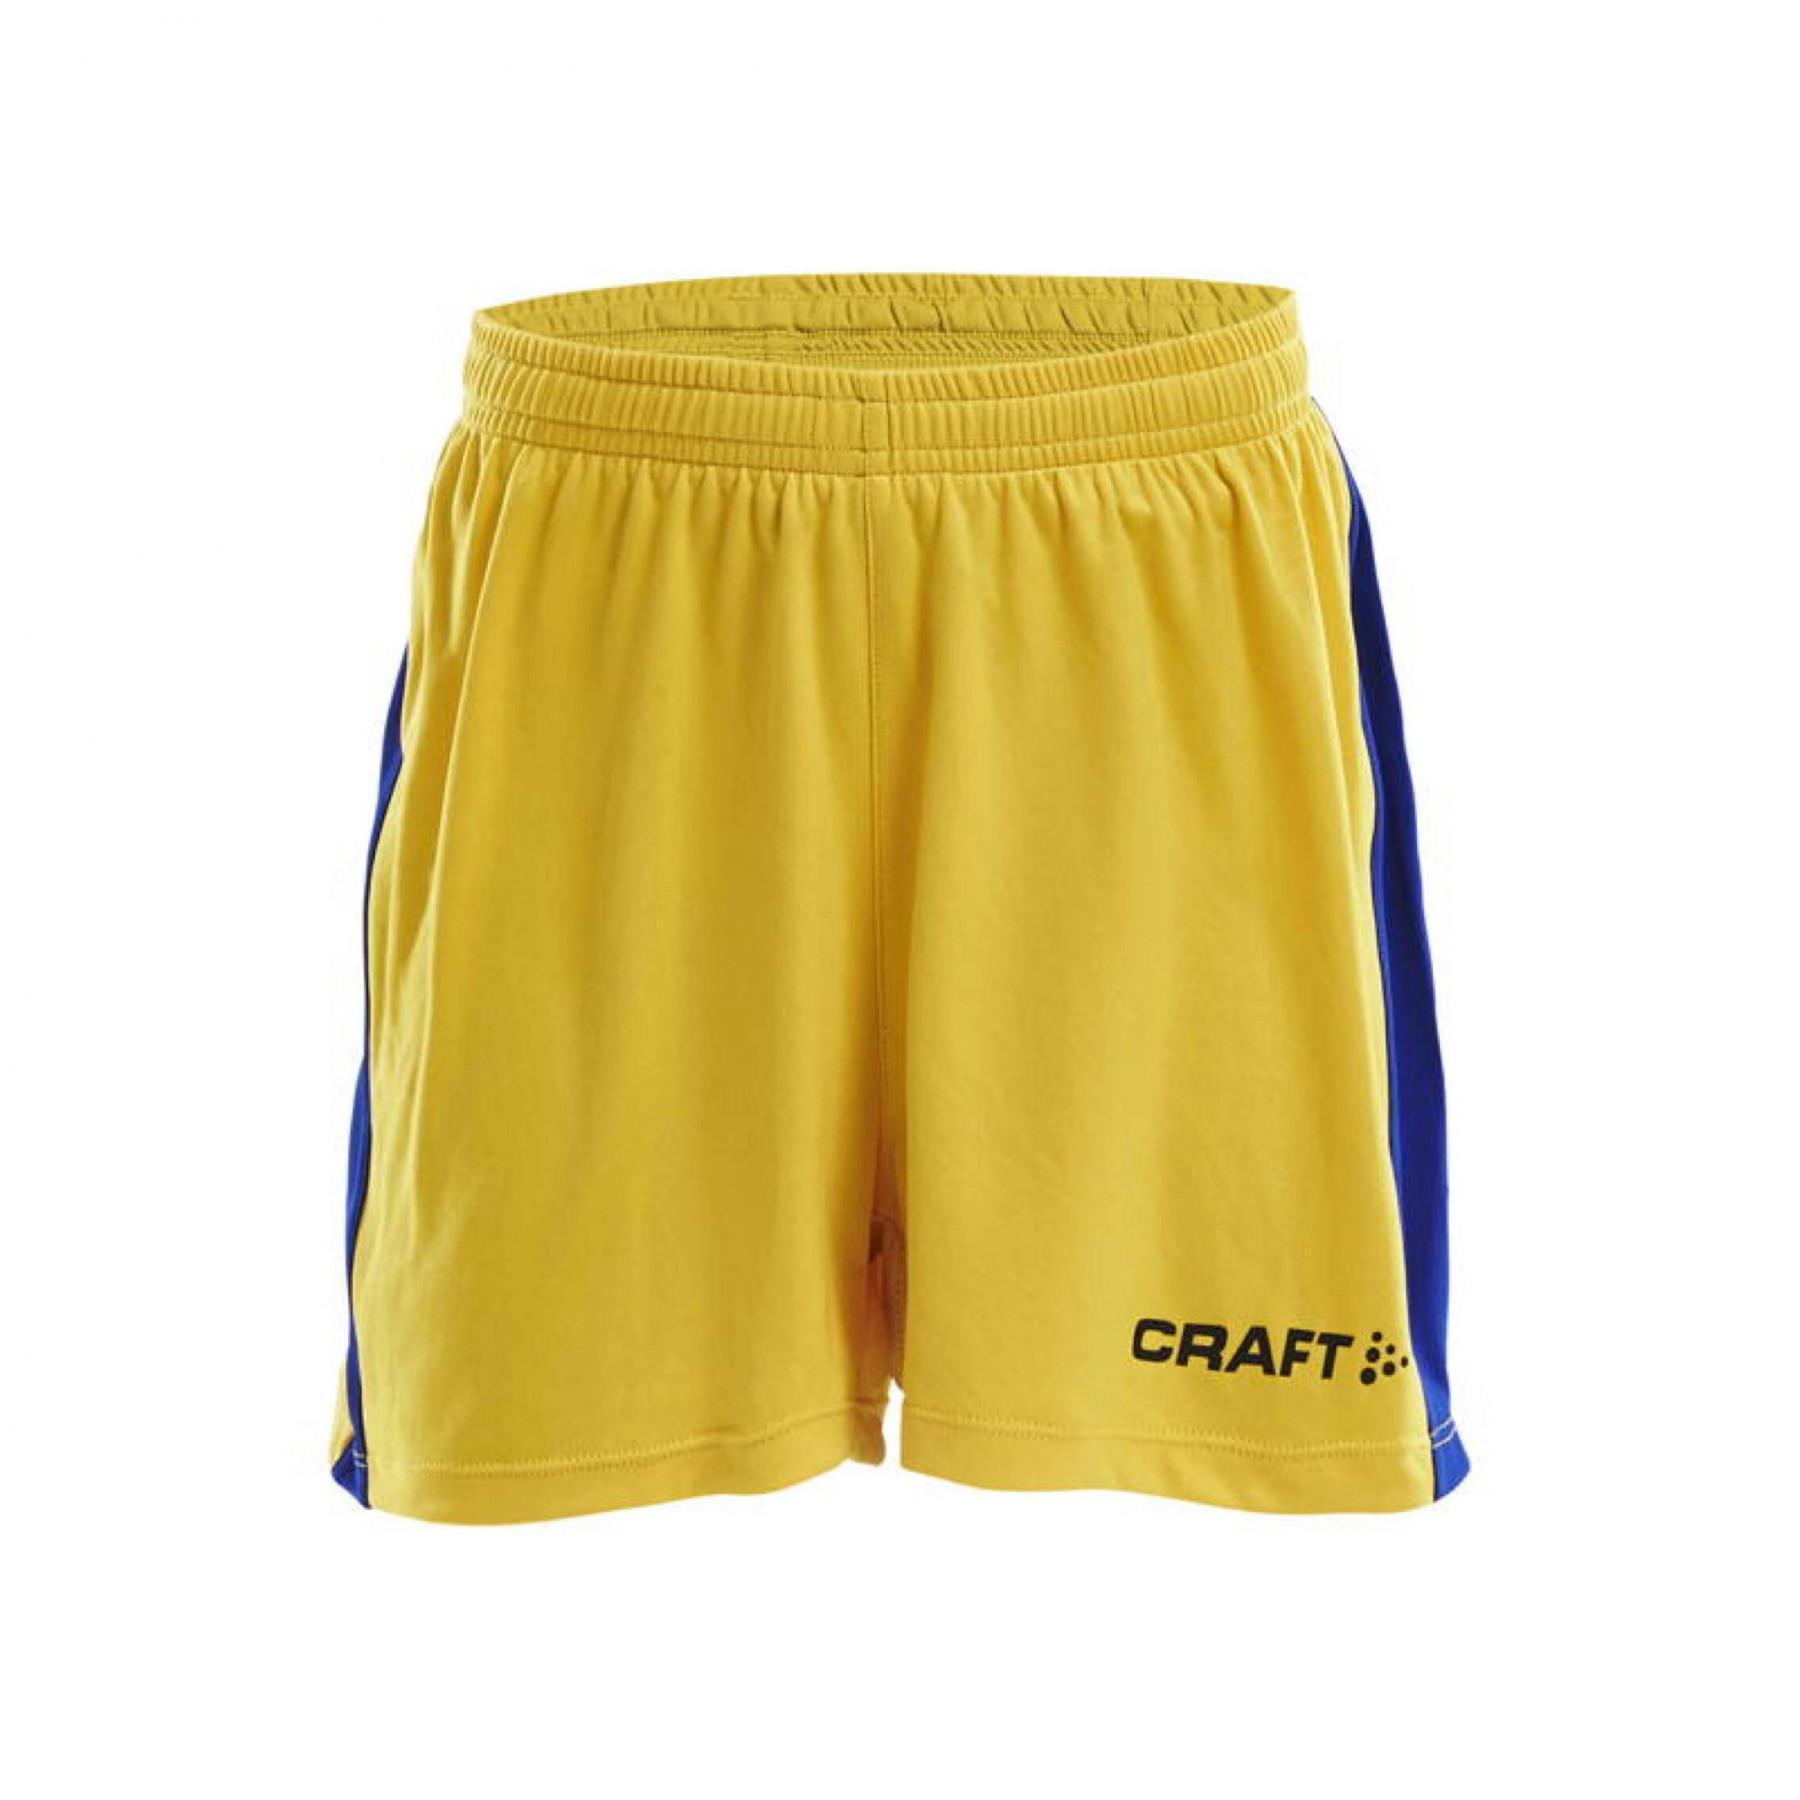 Kinder shorts Craft progress contrast